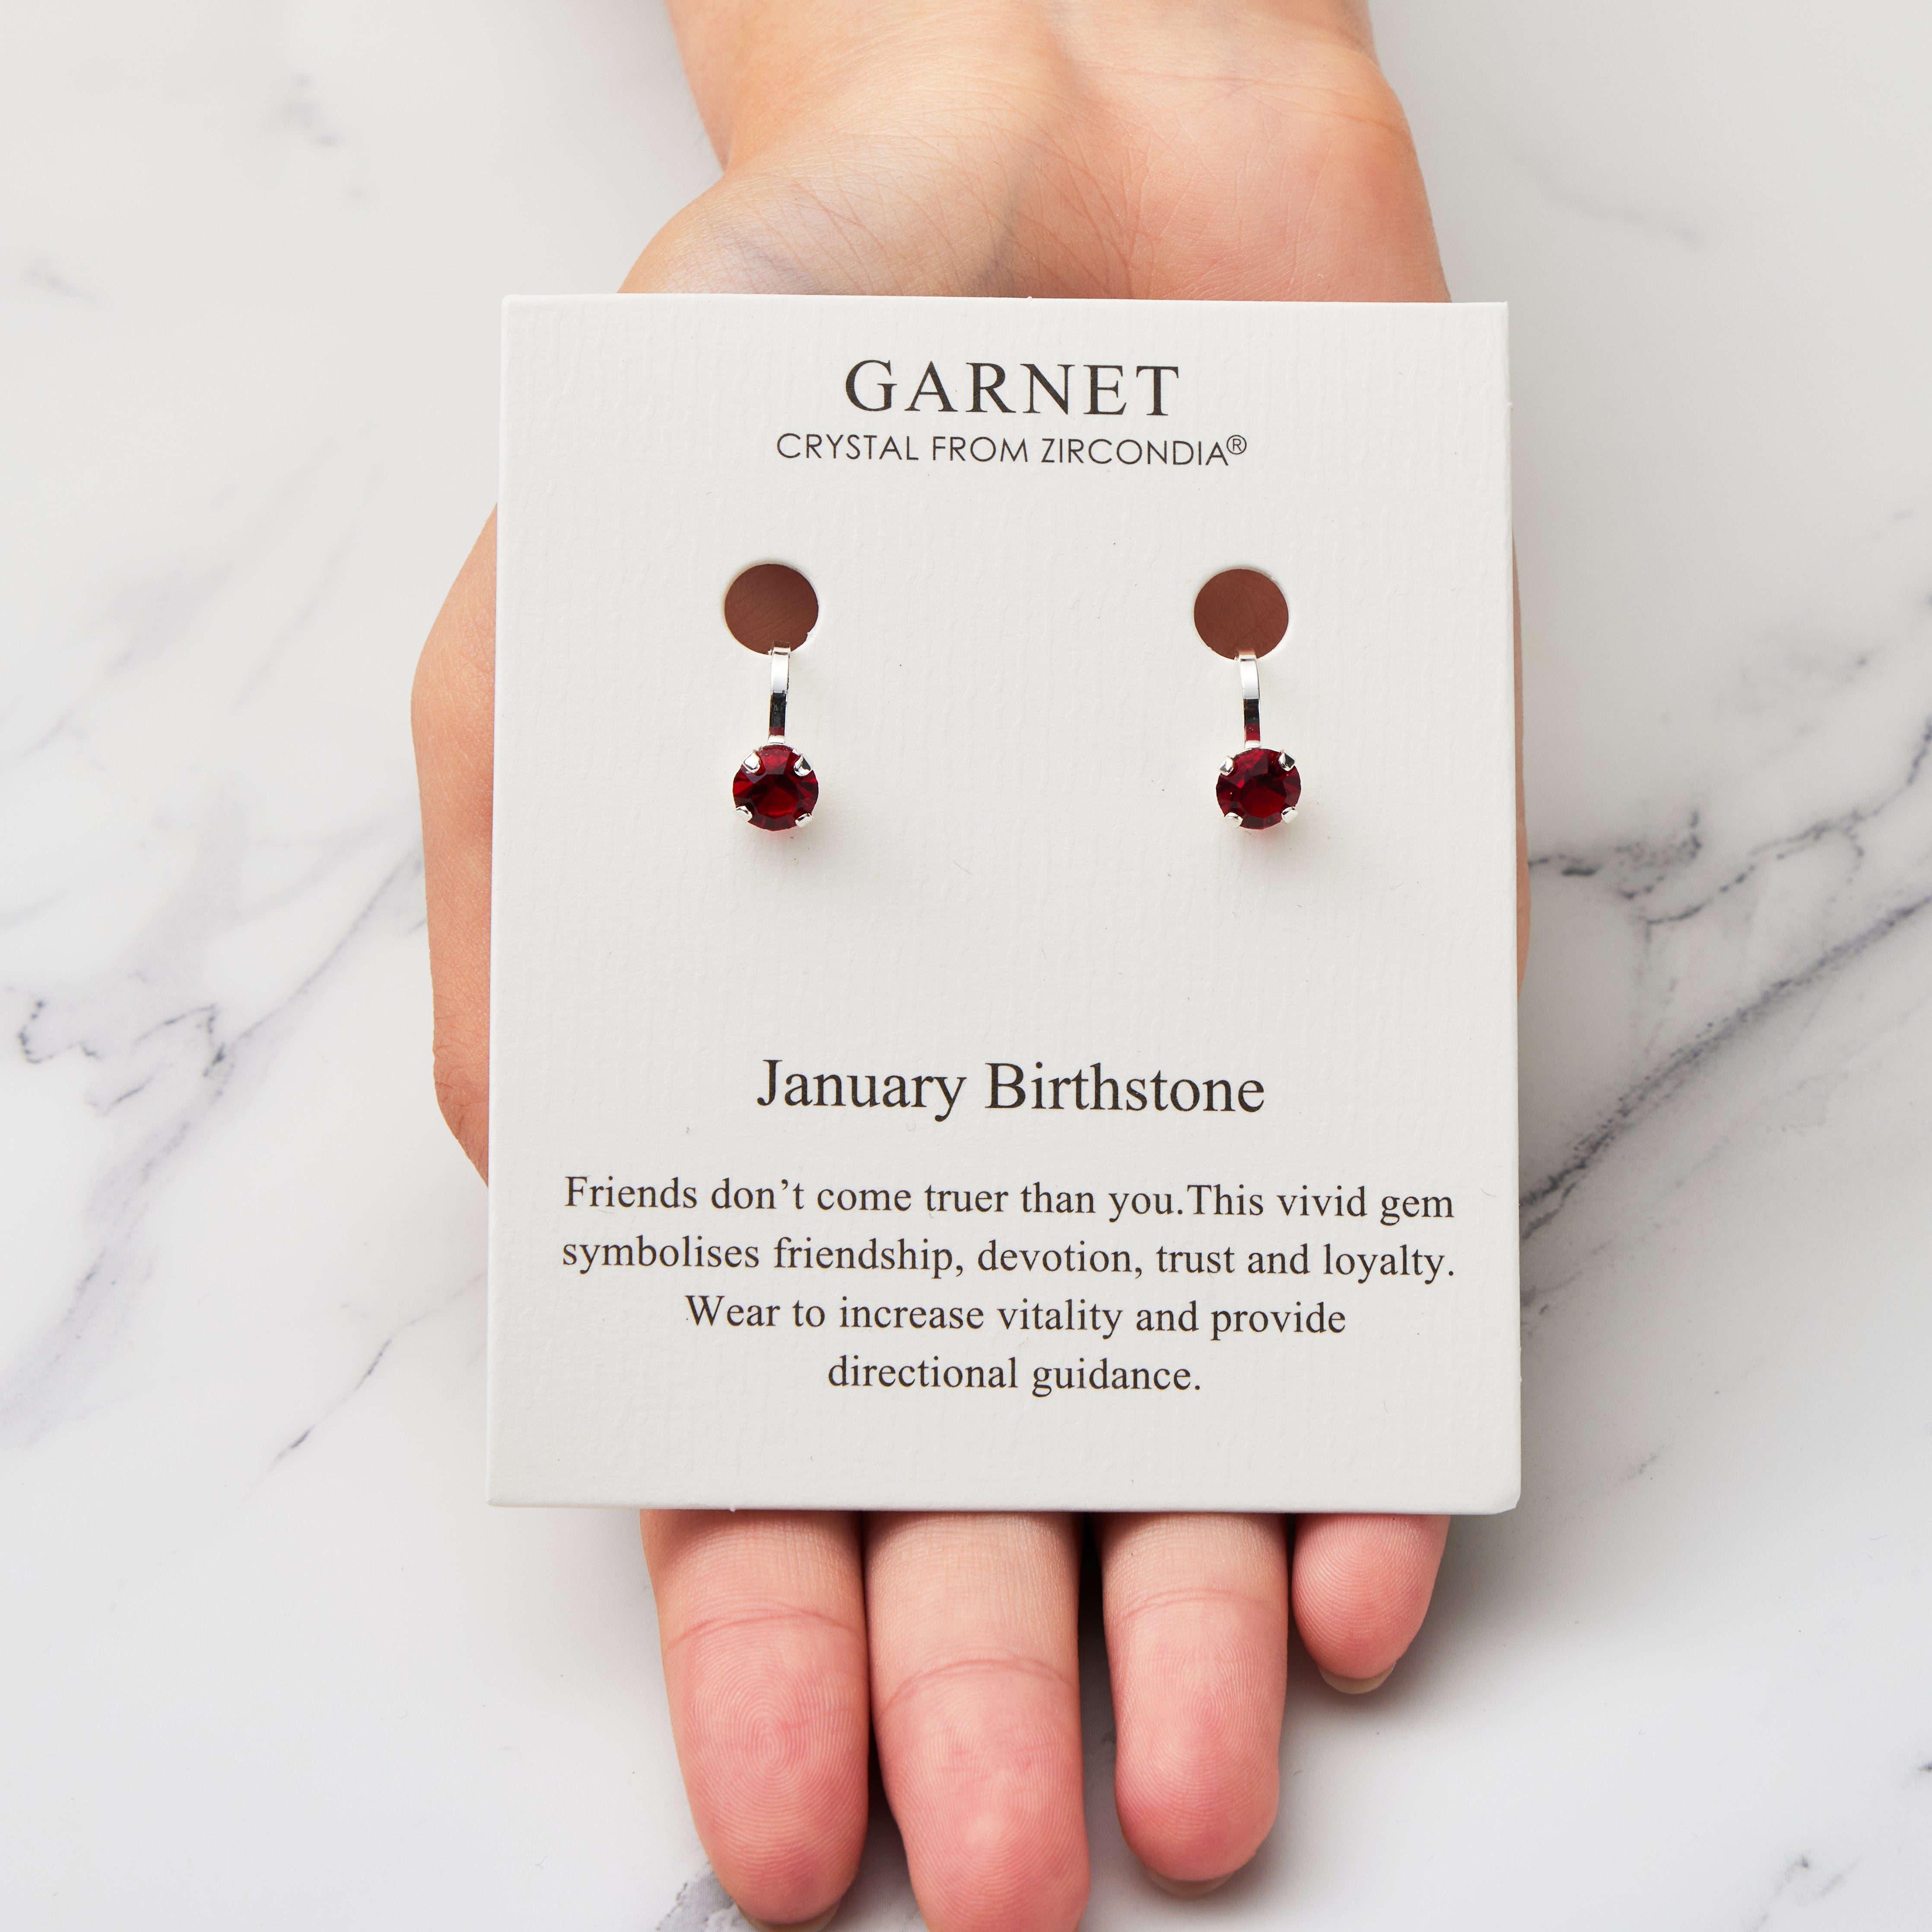 January (Garnet) Birthstone Clip On Earrings Created with Zircondia® Crystals